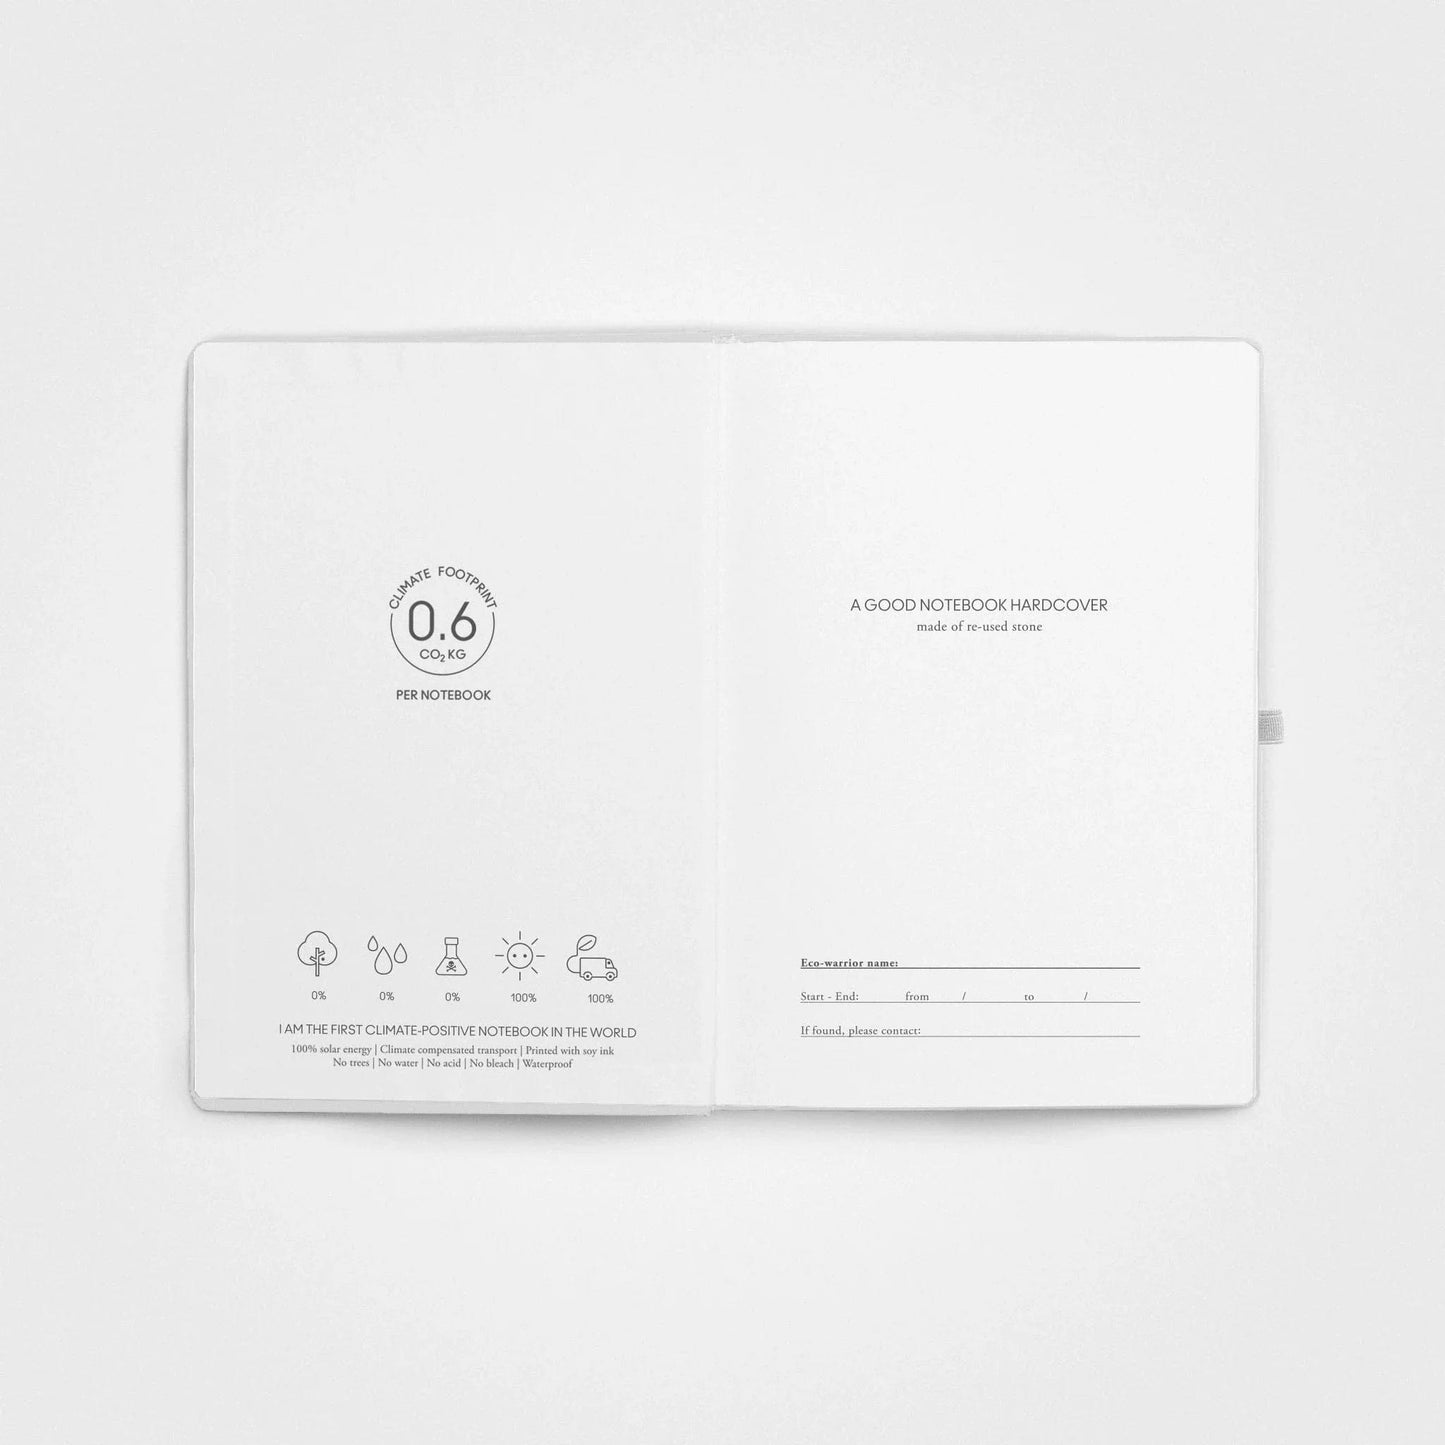 Steinpapier-Notizbuch – A5 Hardcover, Christian Beijer | Girl with a dress, white